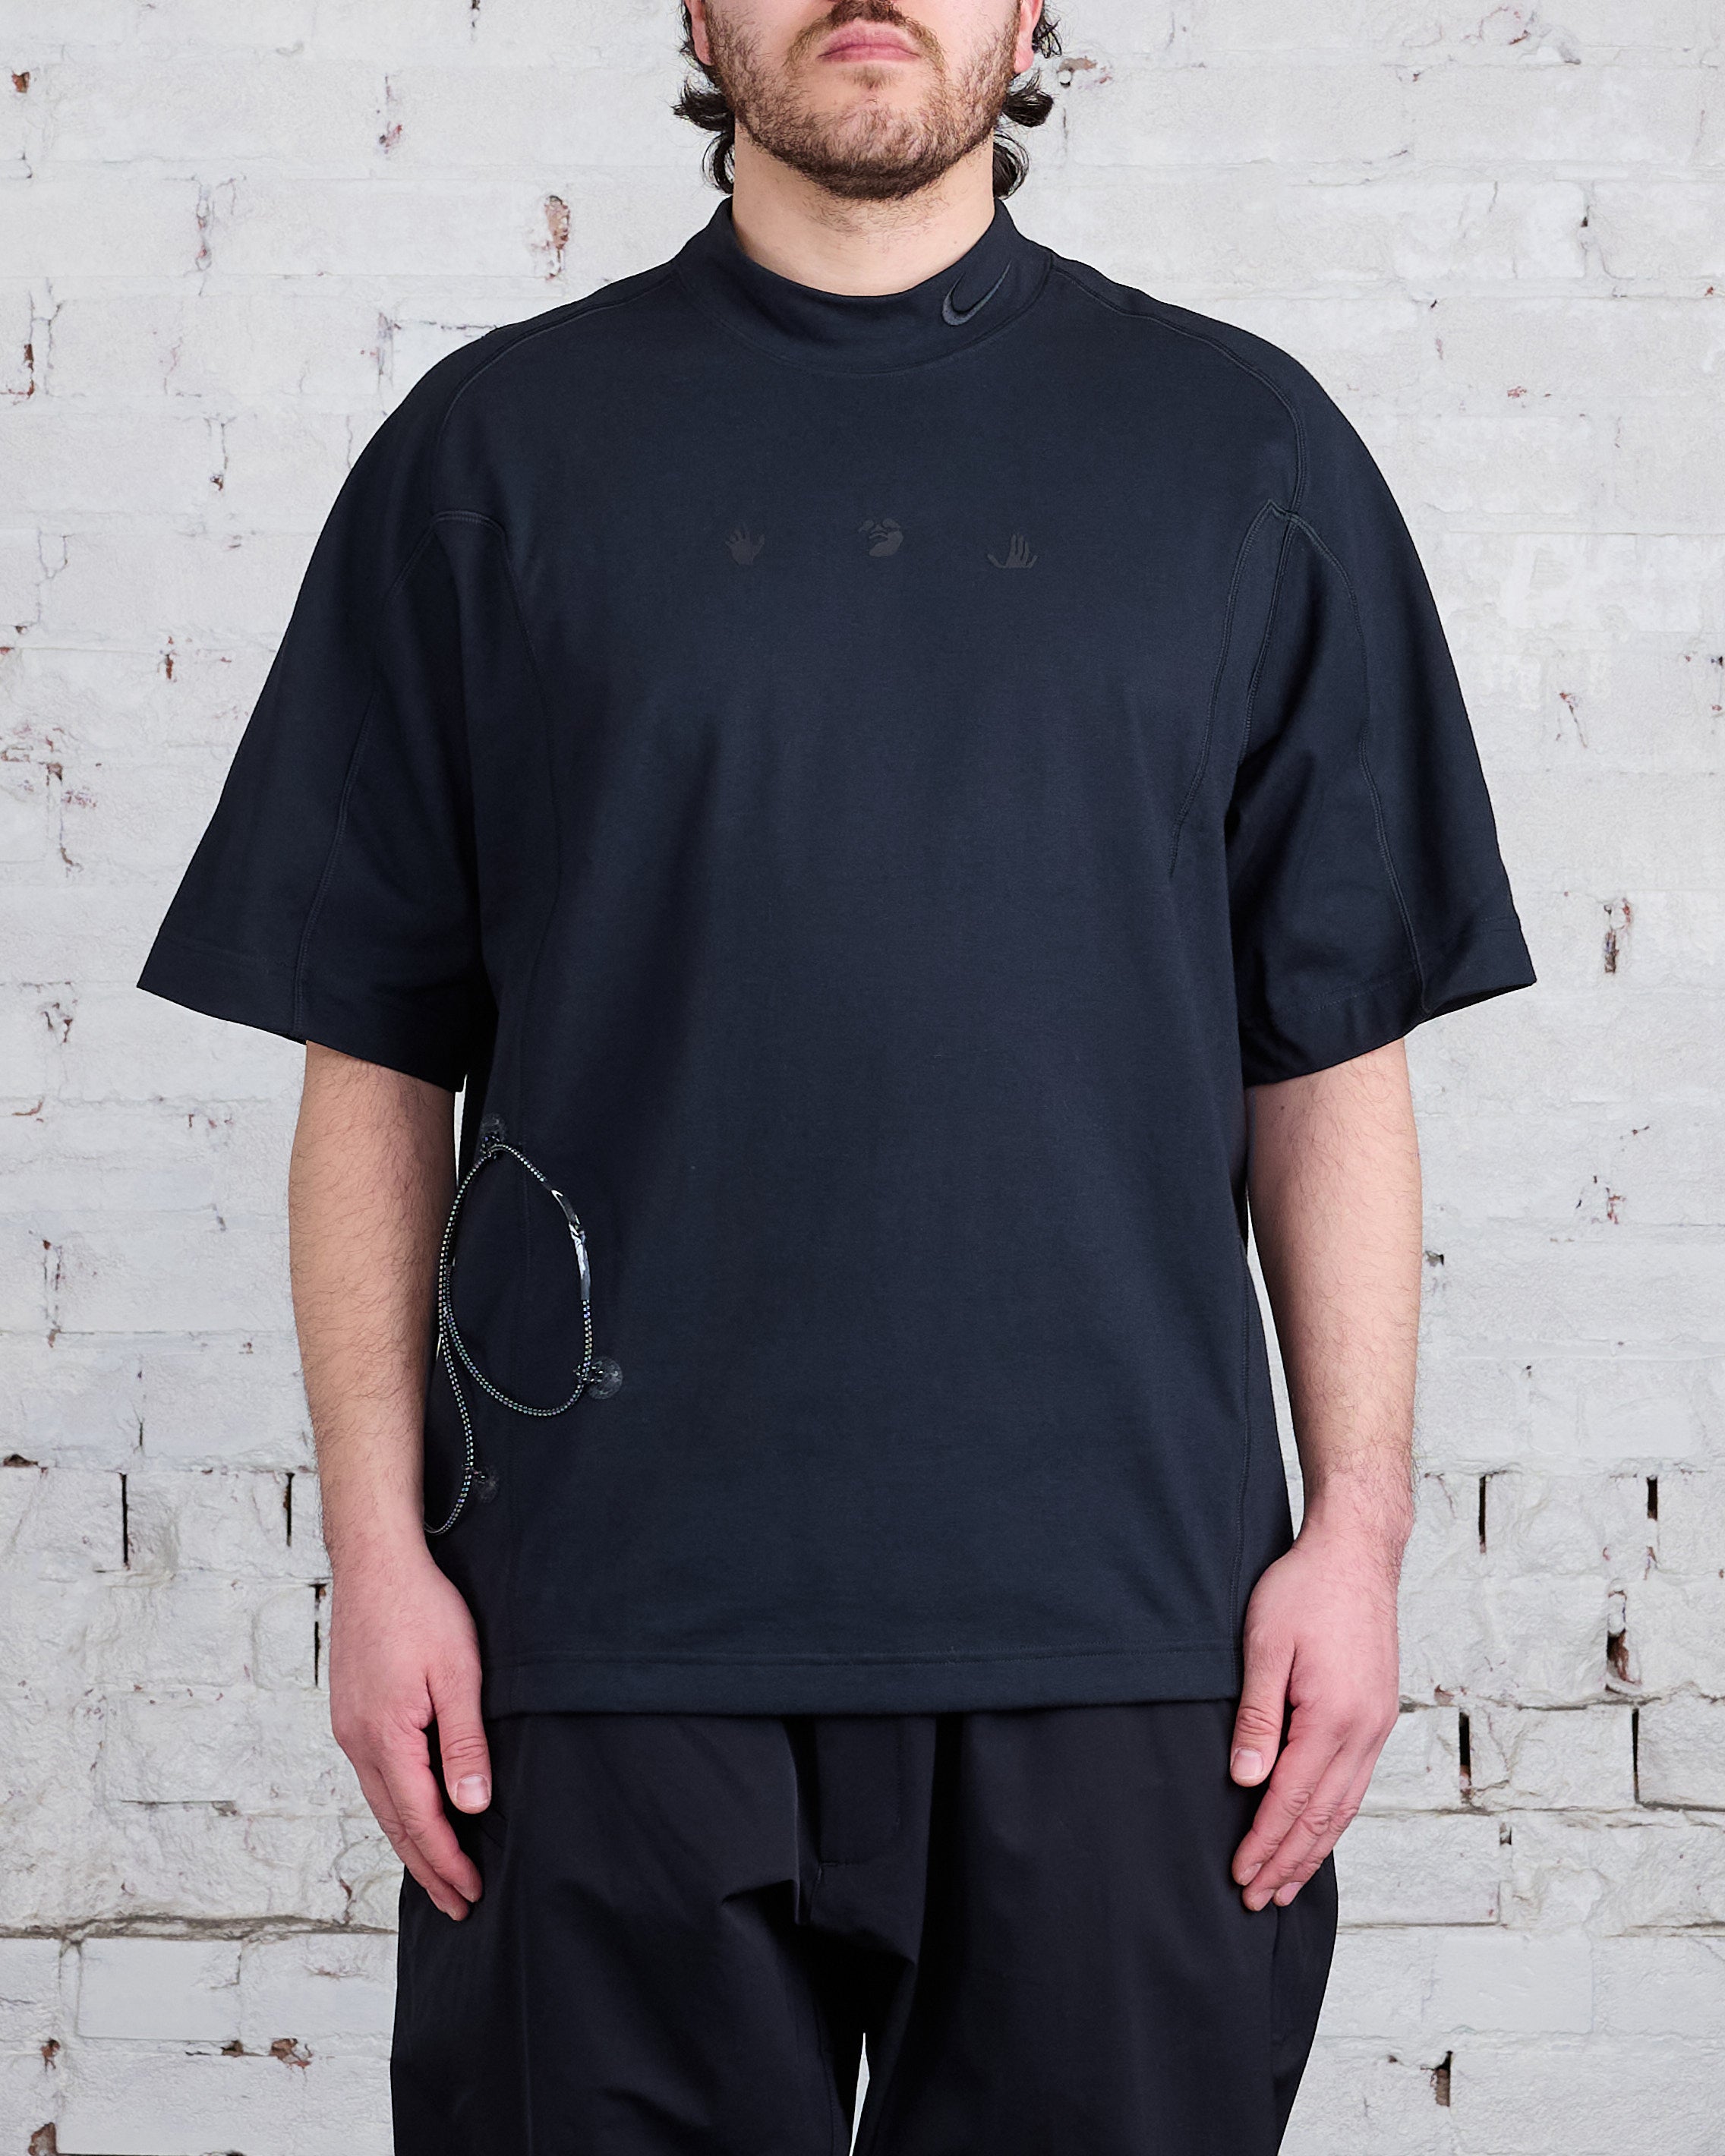 Nike x Off-White™ Short-Sleeve Top Black